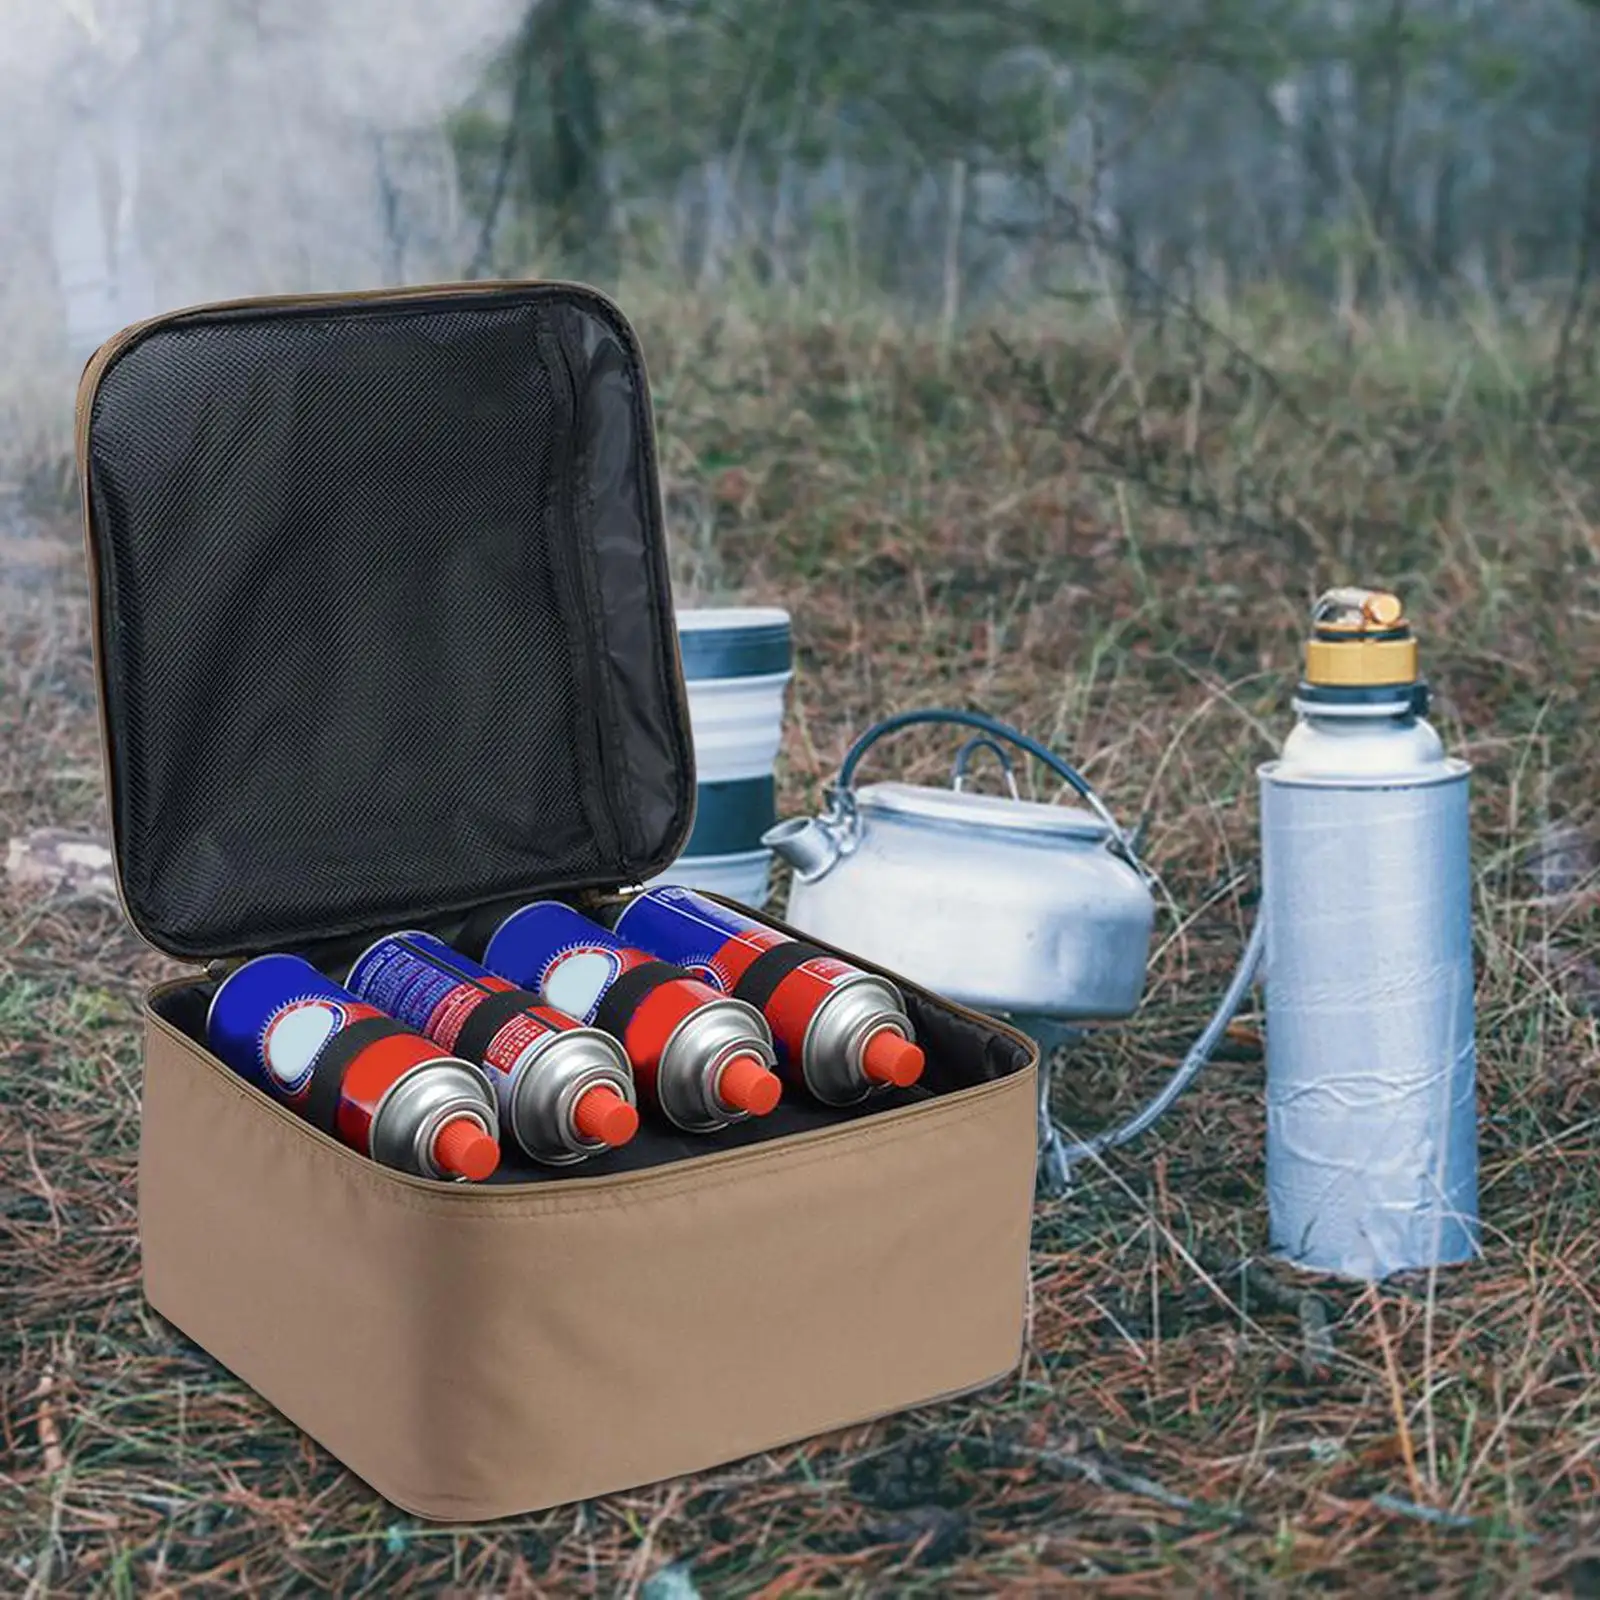 Gas Tank Storage Bag Camping Stove Tote Bag for Cooking Picnic Road Trip